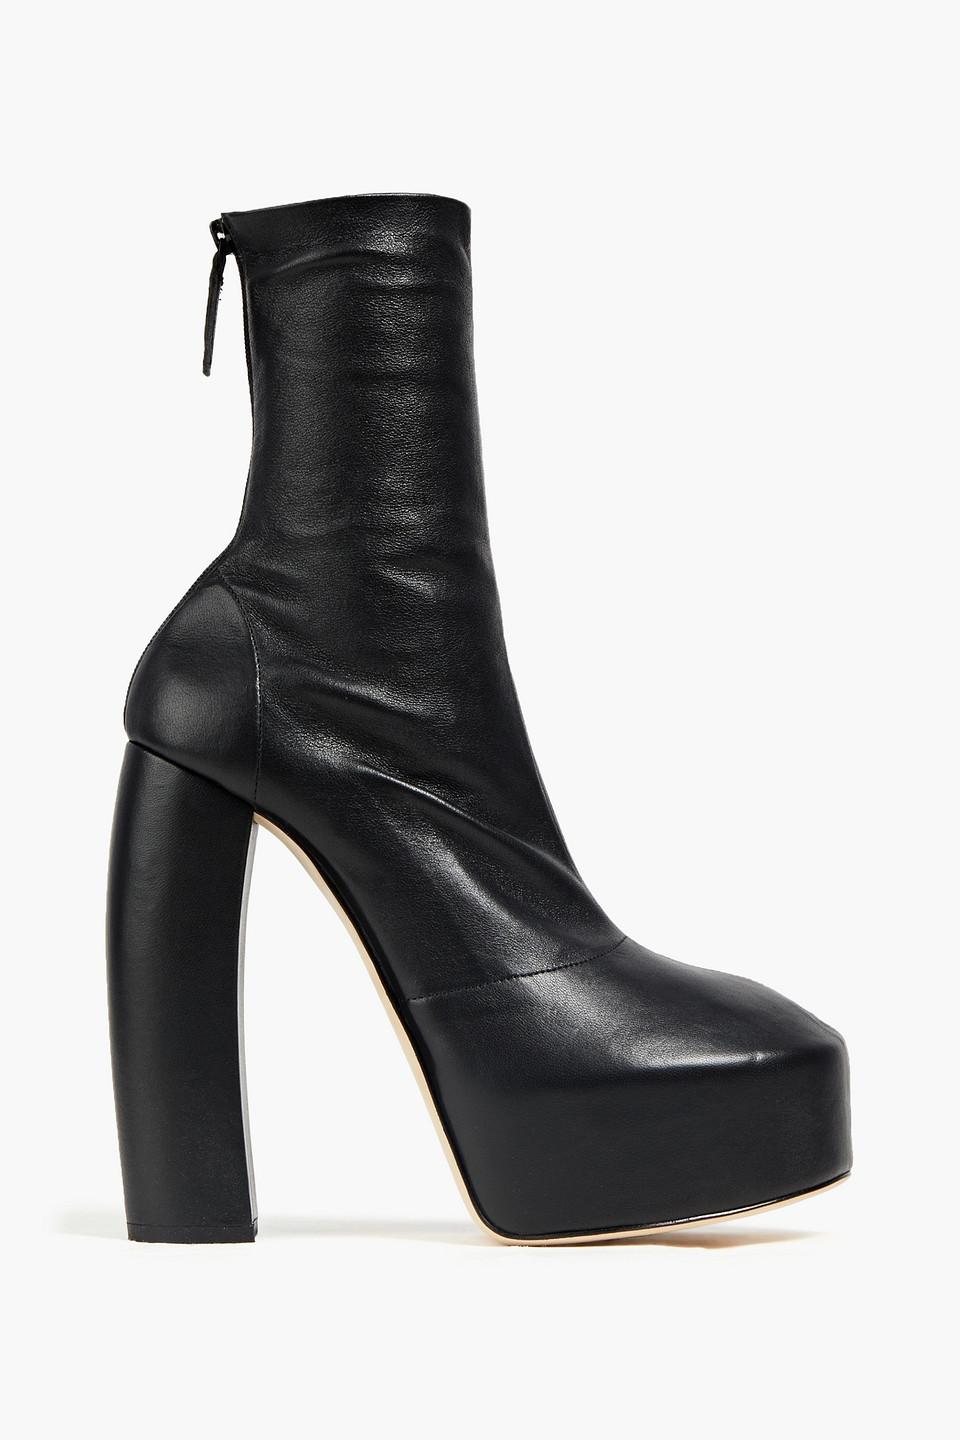 Victoria Beckham Penelope Stretch-leather Platform Ankle Boots in Black |  Lyst